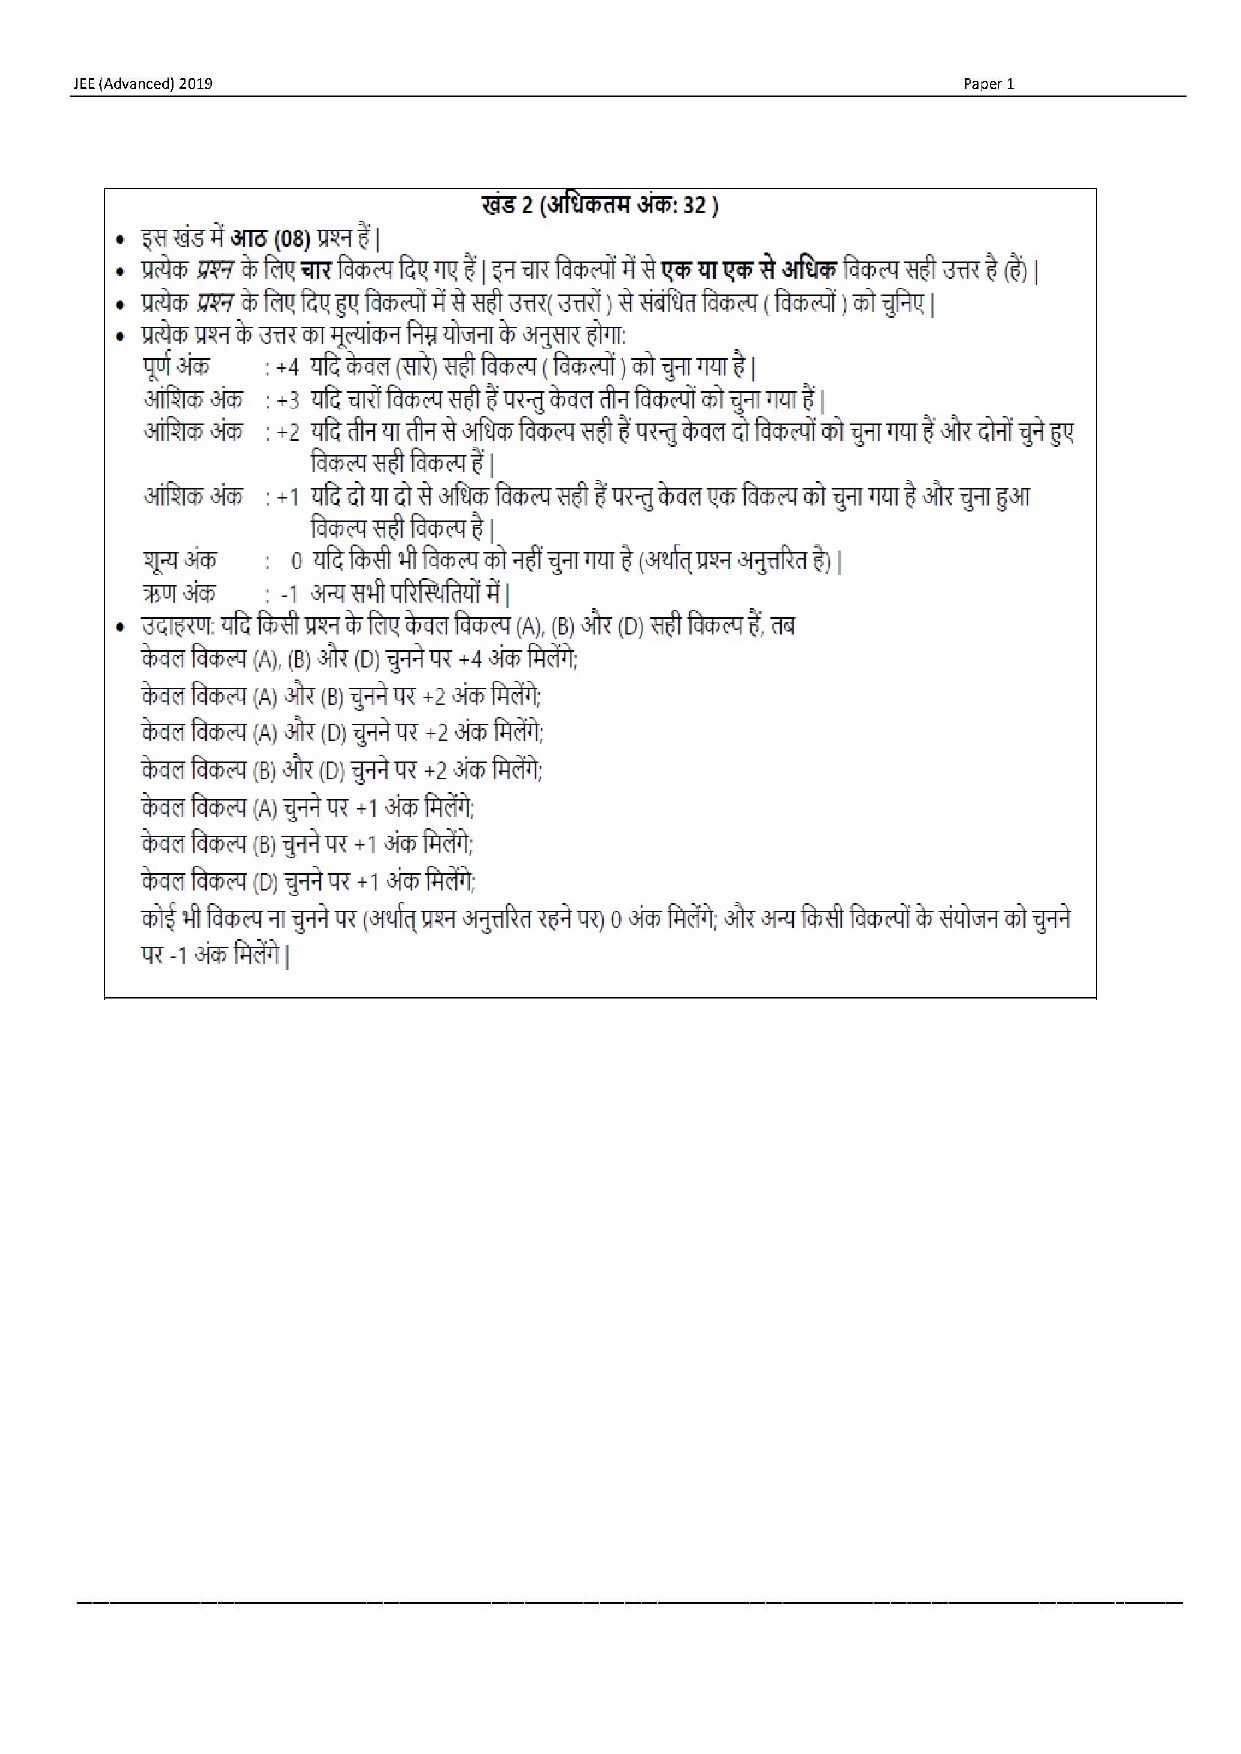 JEE Advanced Hindi Question Paper 2019 Paper 1 Physics 3